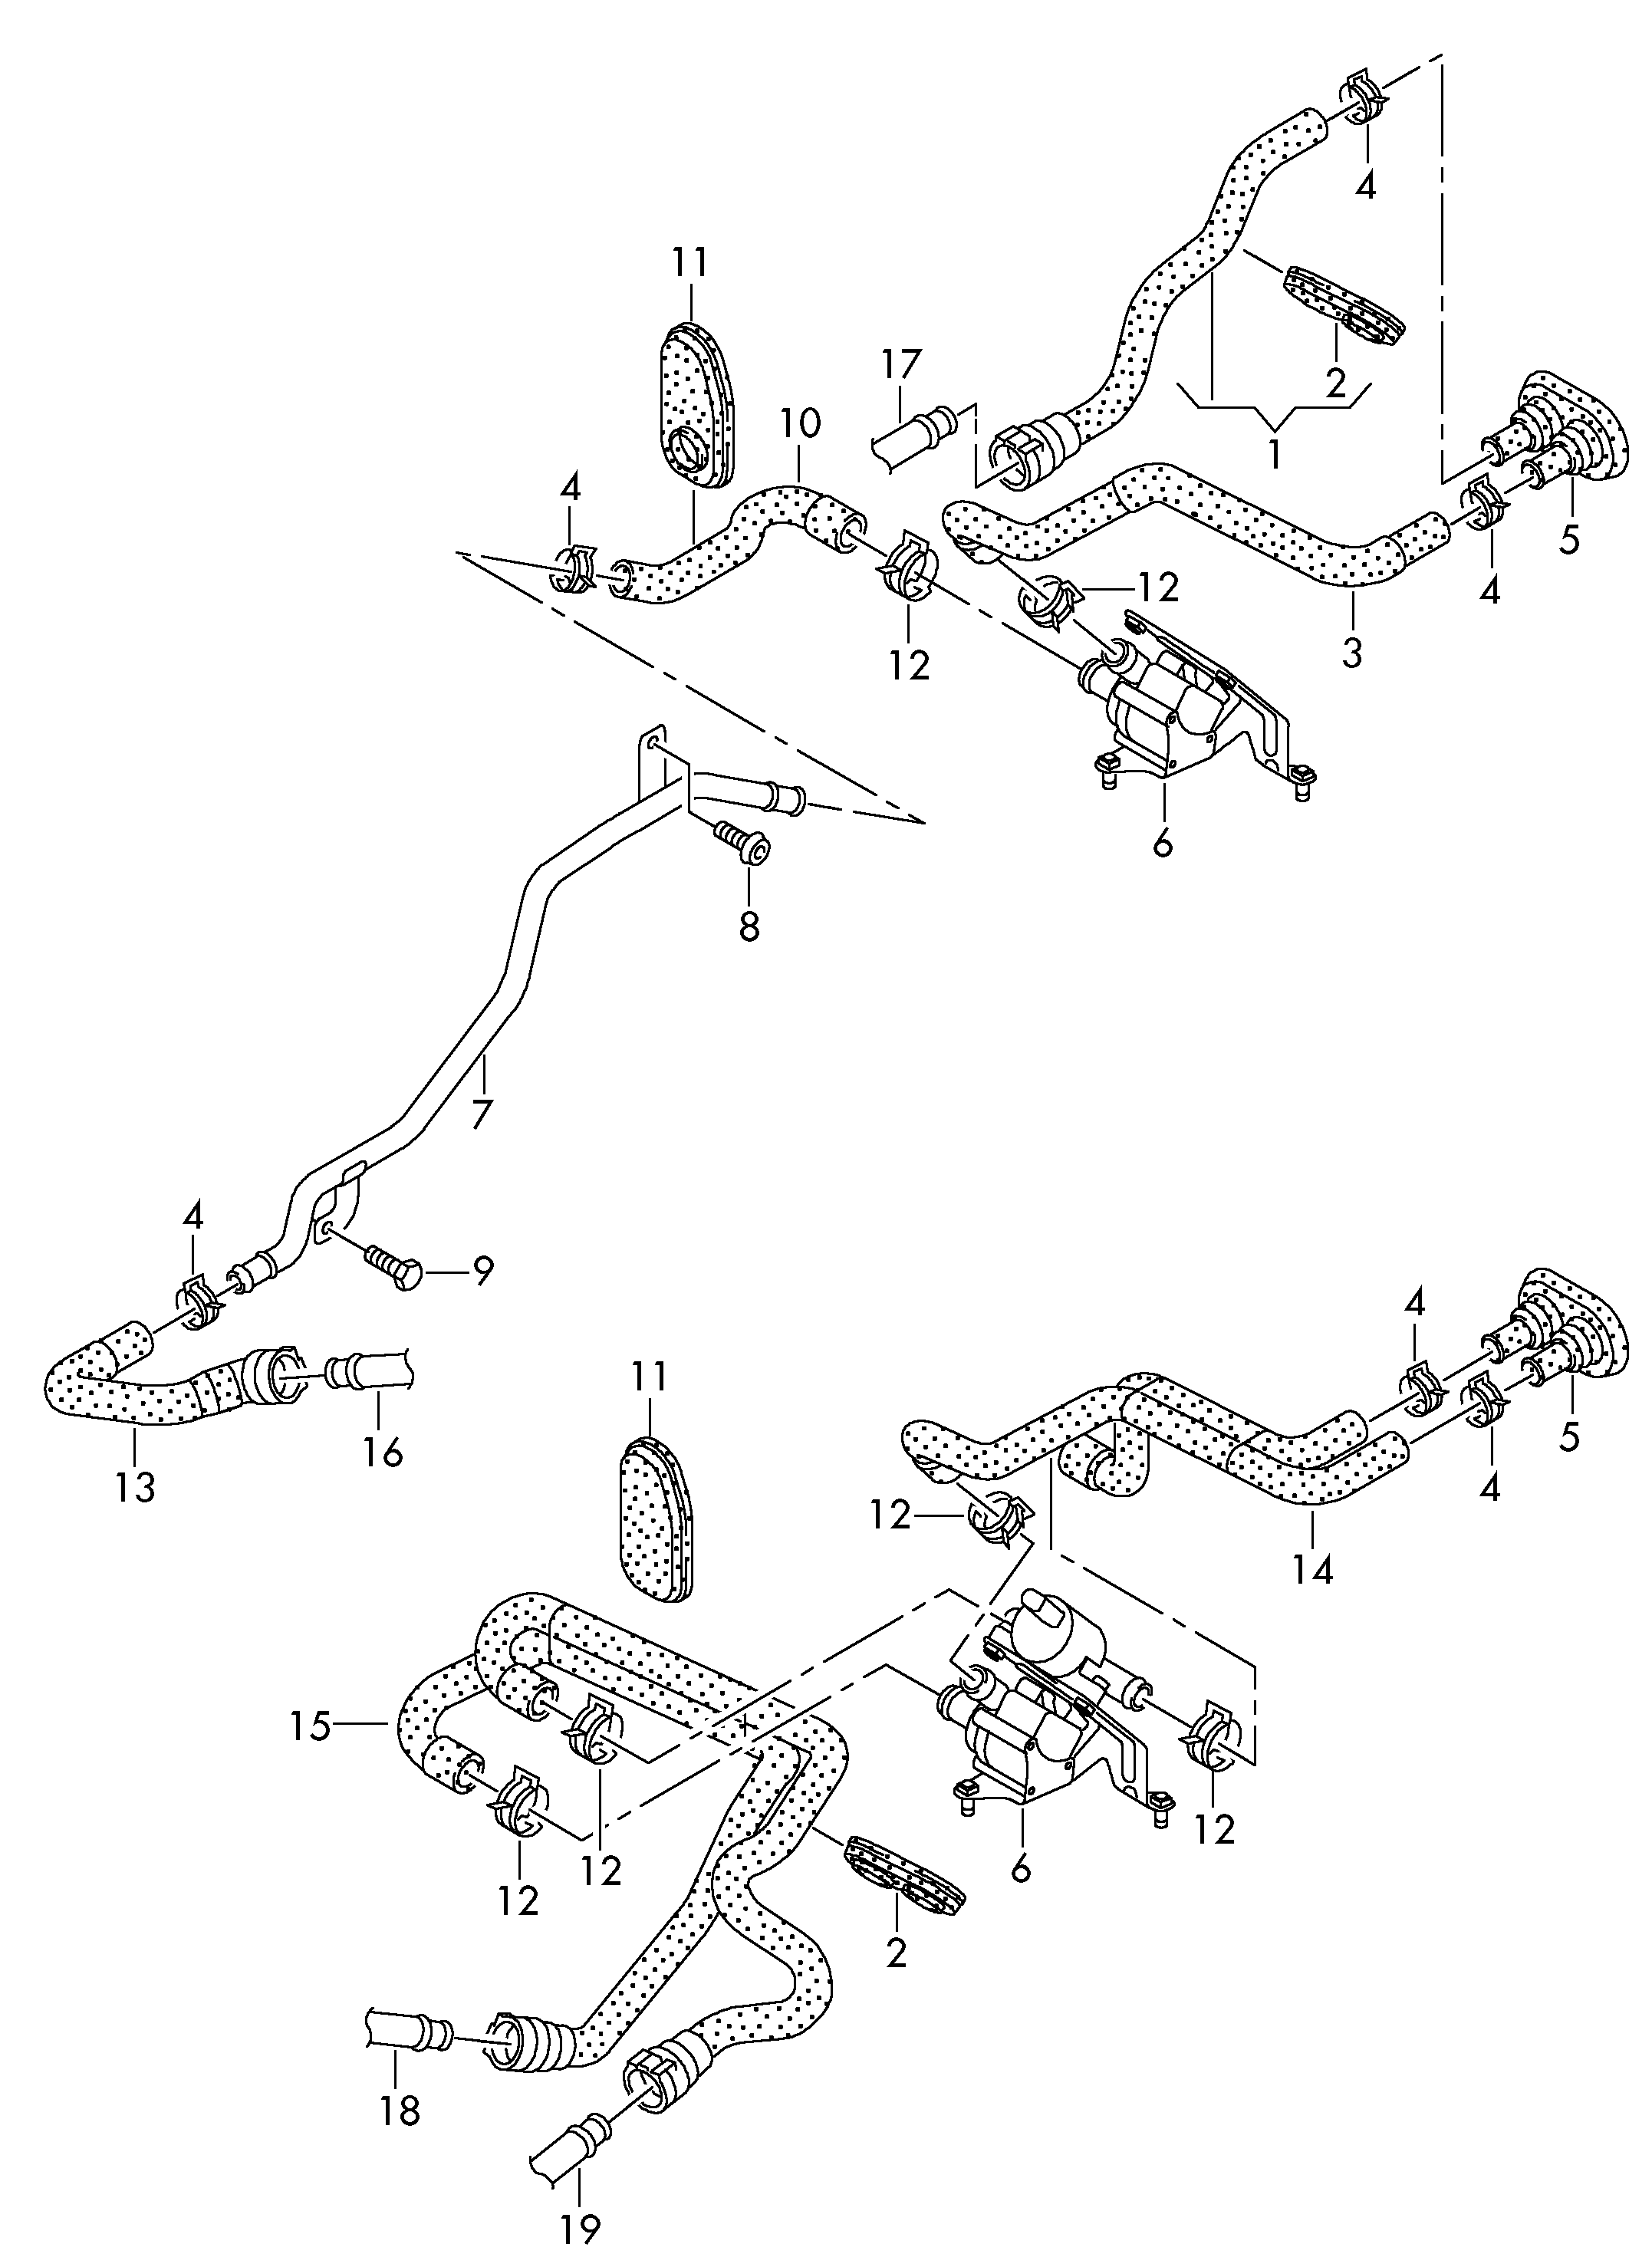 flexible liq. refroidissement
pour chauffage - Audi A6/Avant(A6)  